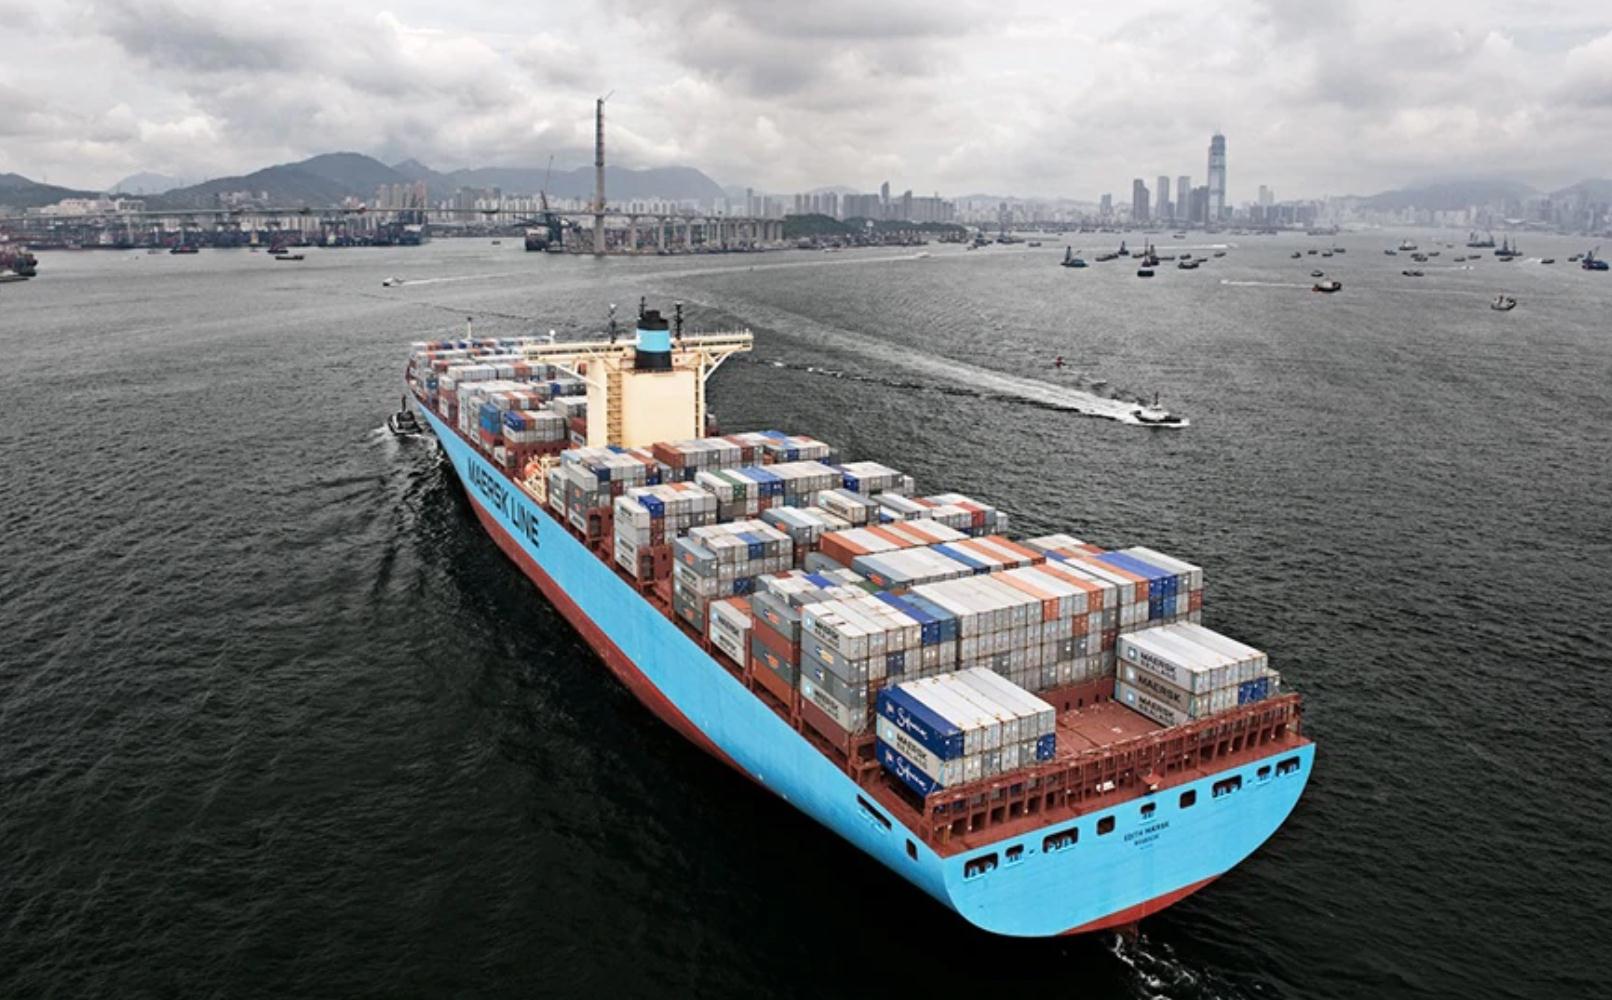 Self Photos / Files - Maersk approaching Shanghai